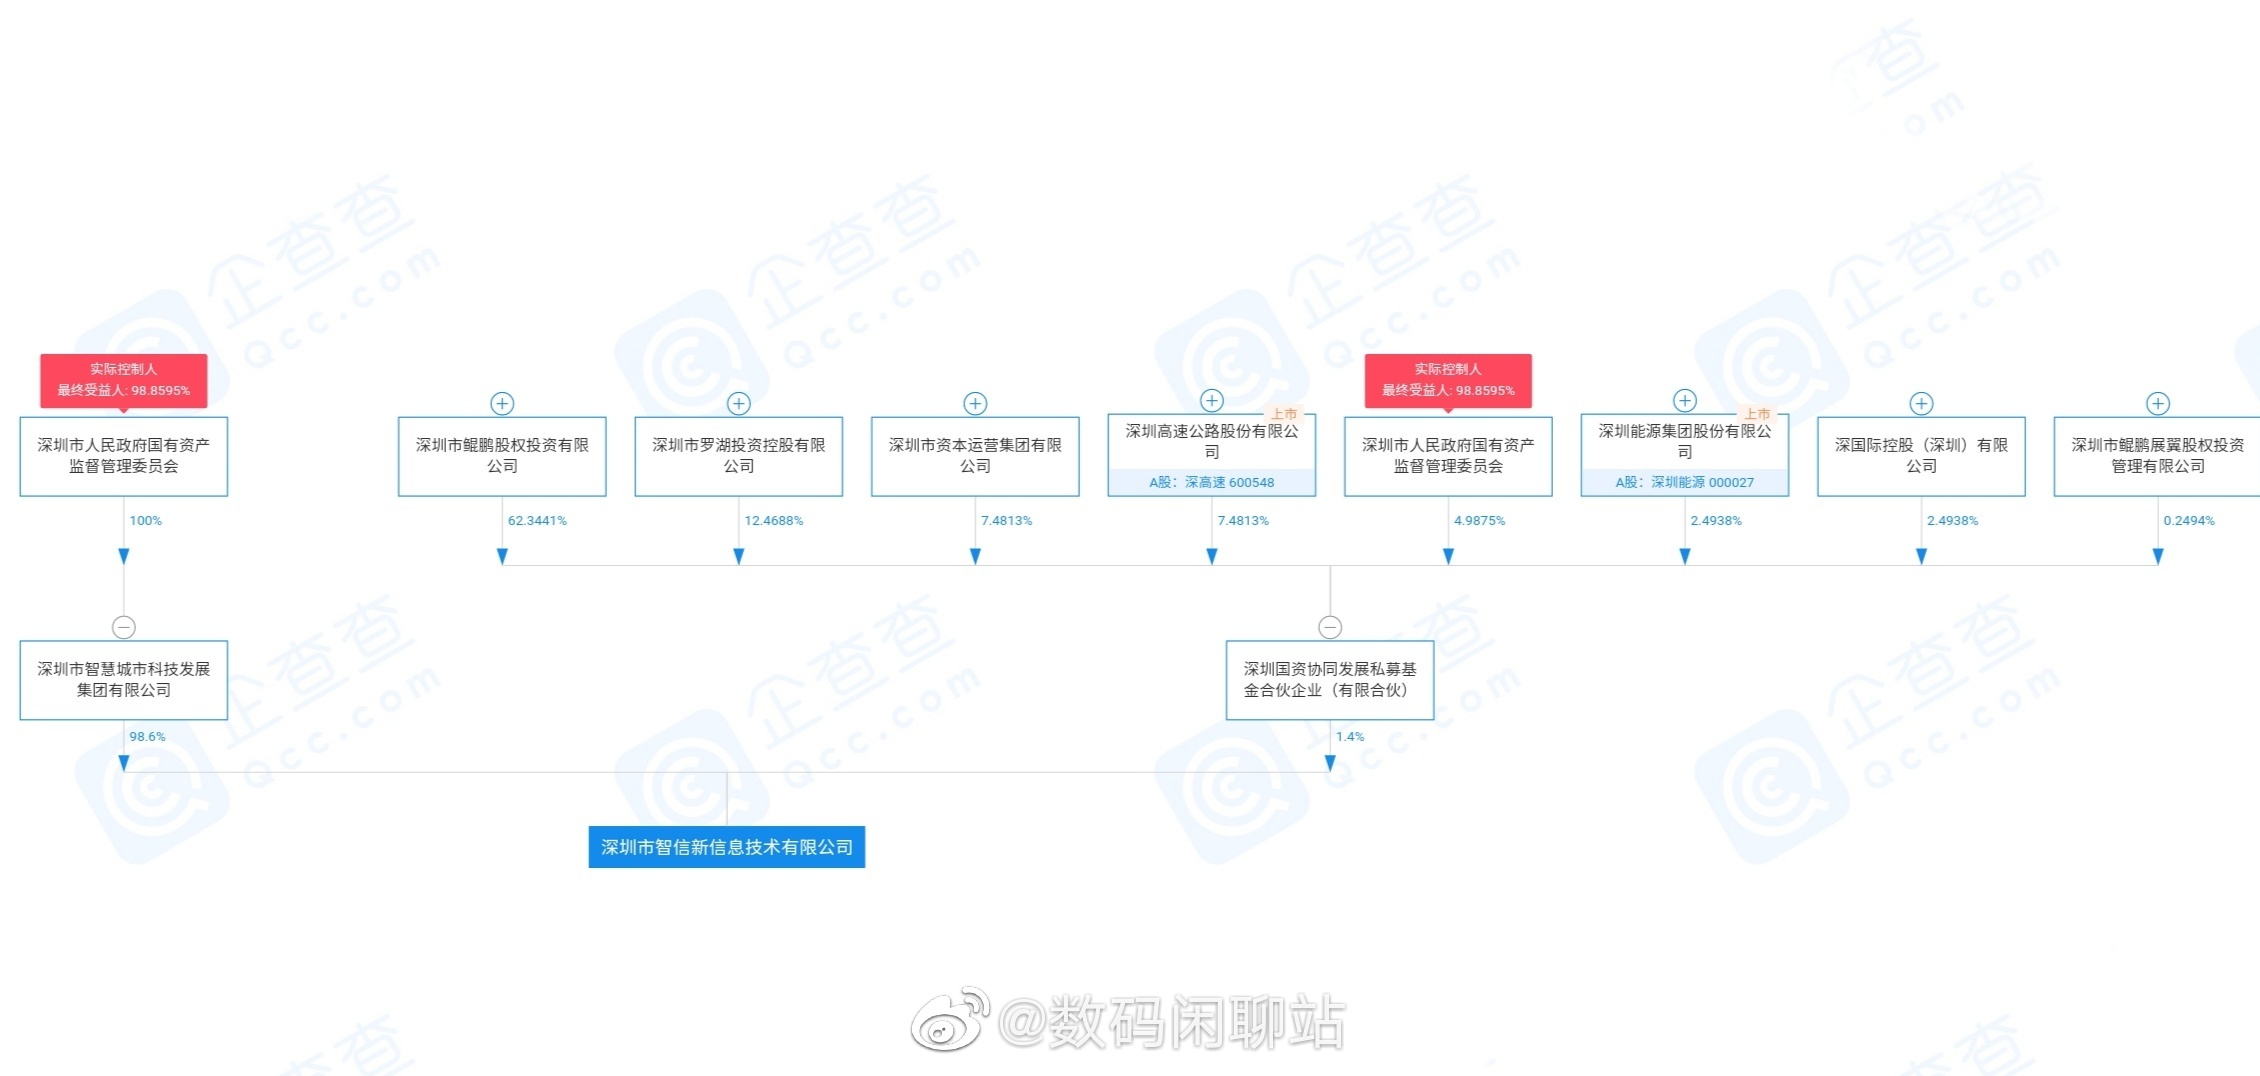  Компания Huawei продала Honor Huawei  - oficialno_huawei_prodala_honor_i_vse_chto_s_nim_svazano_picture8_0